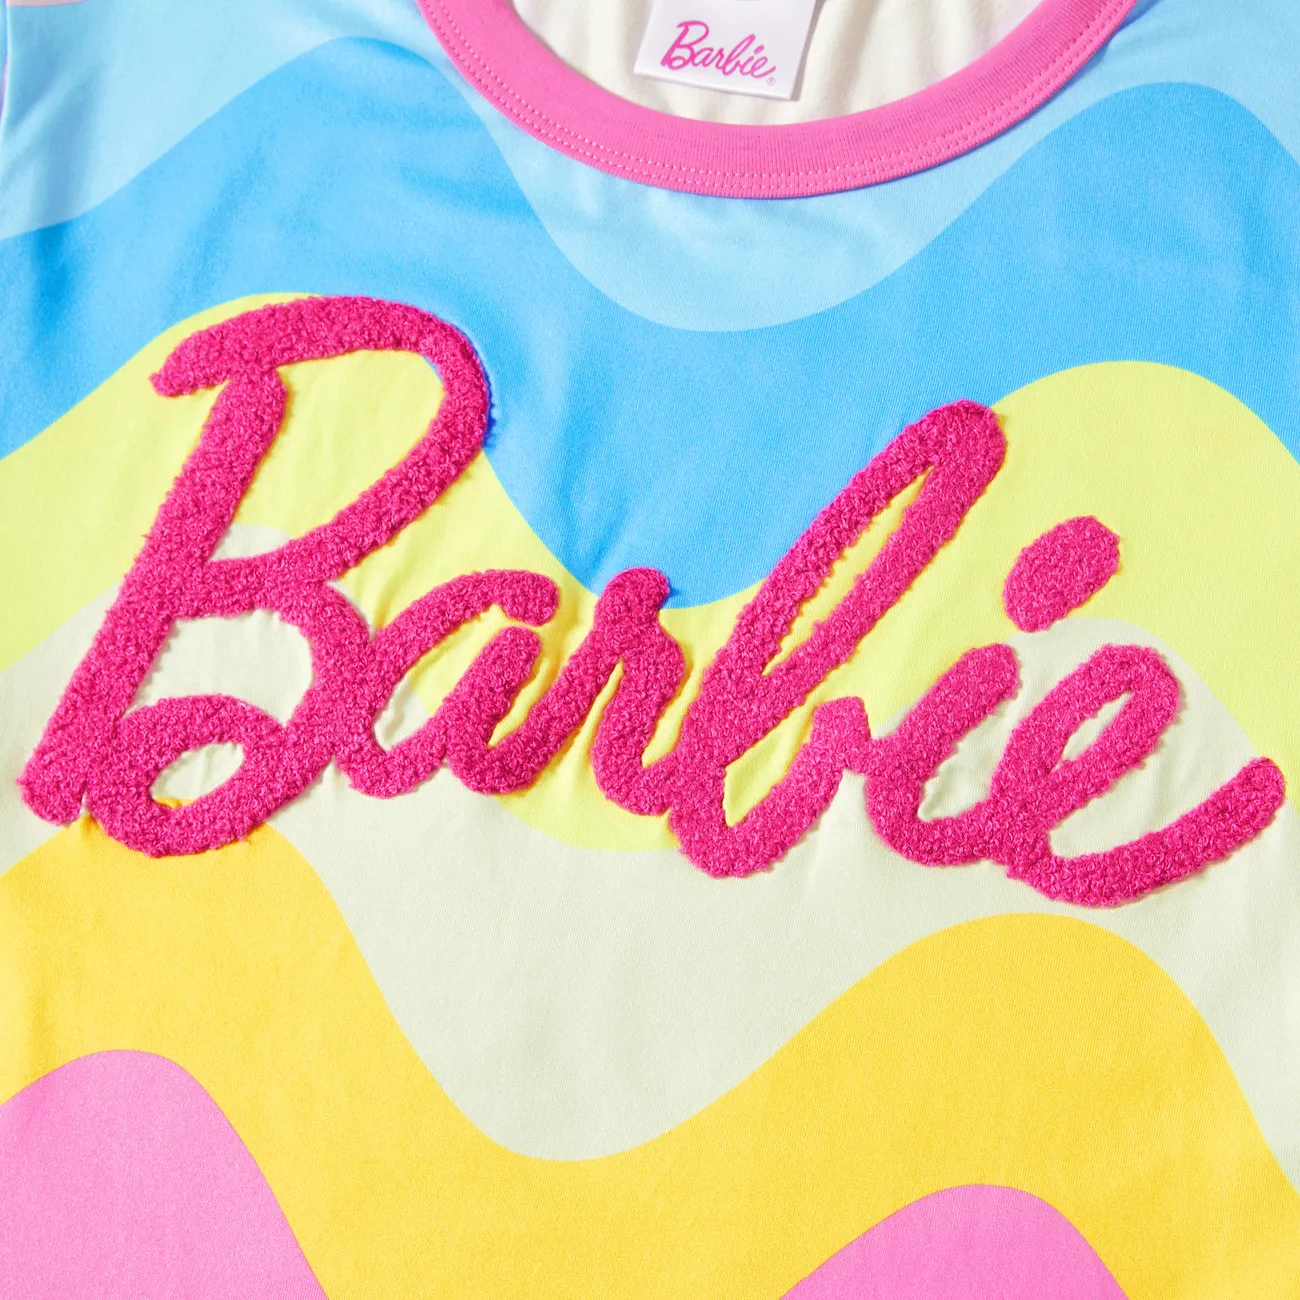 Barbie Mommy & Me Girls Rainbow Top
 PINK-1 big image 1